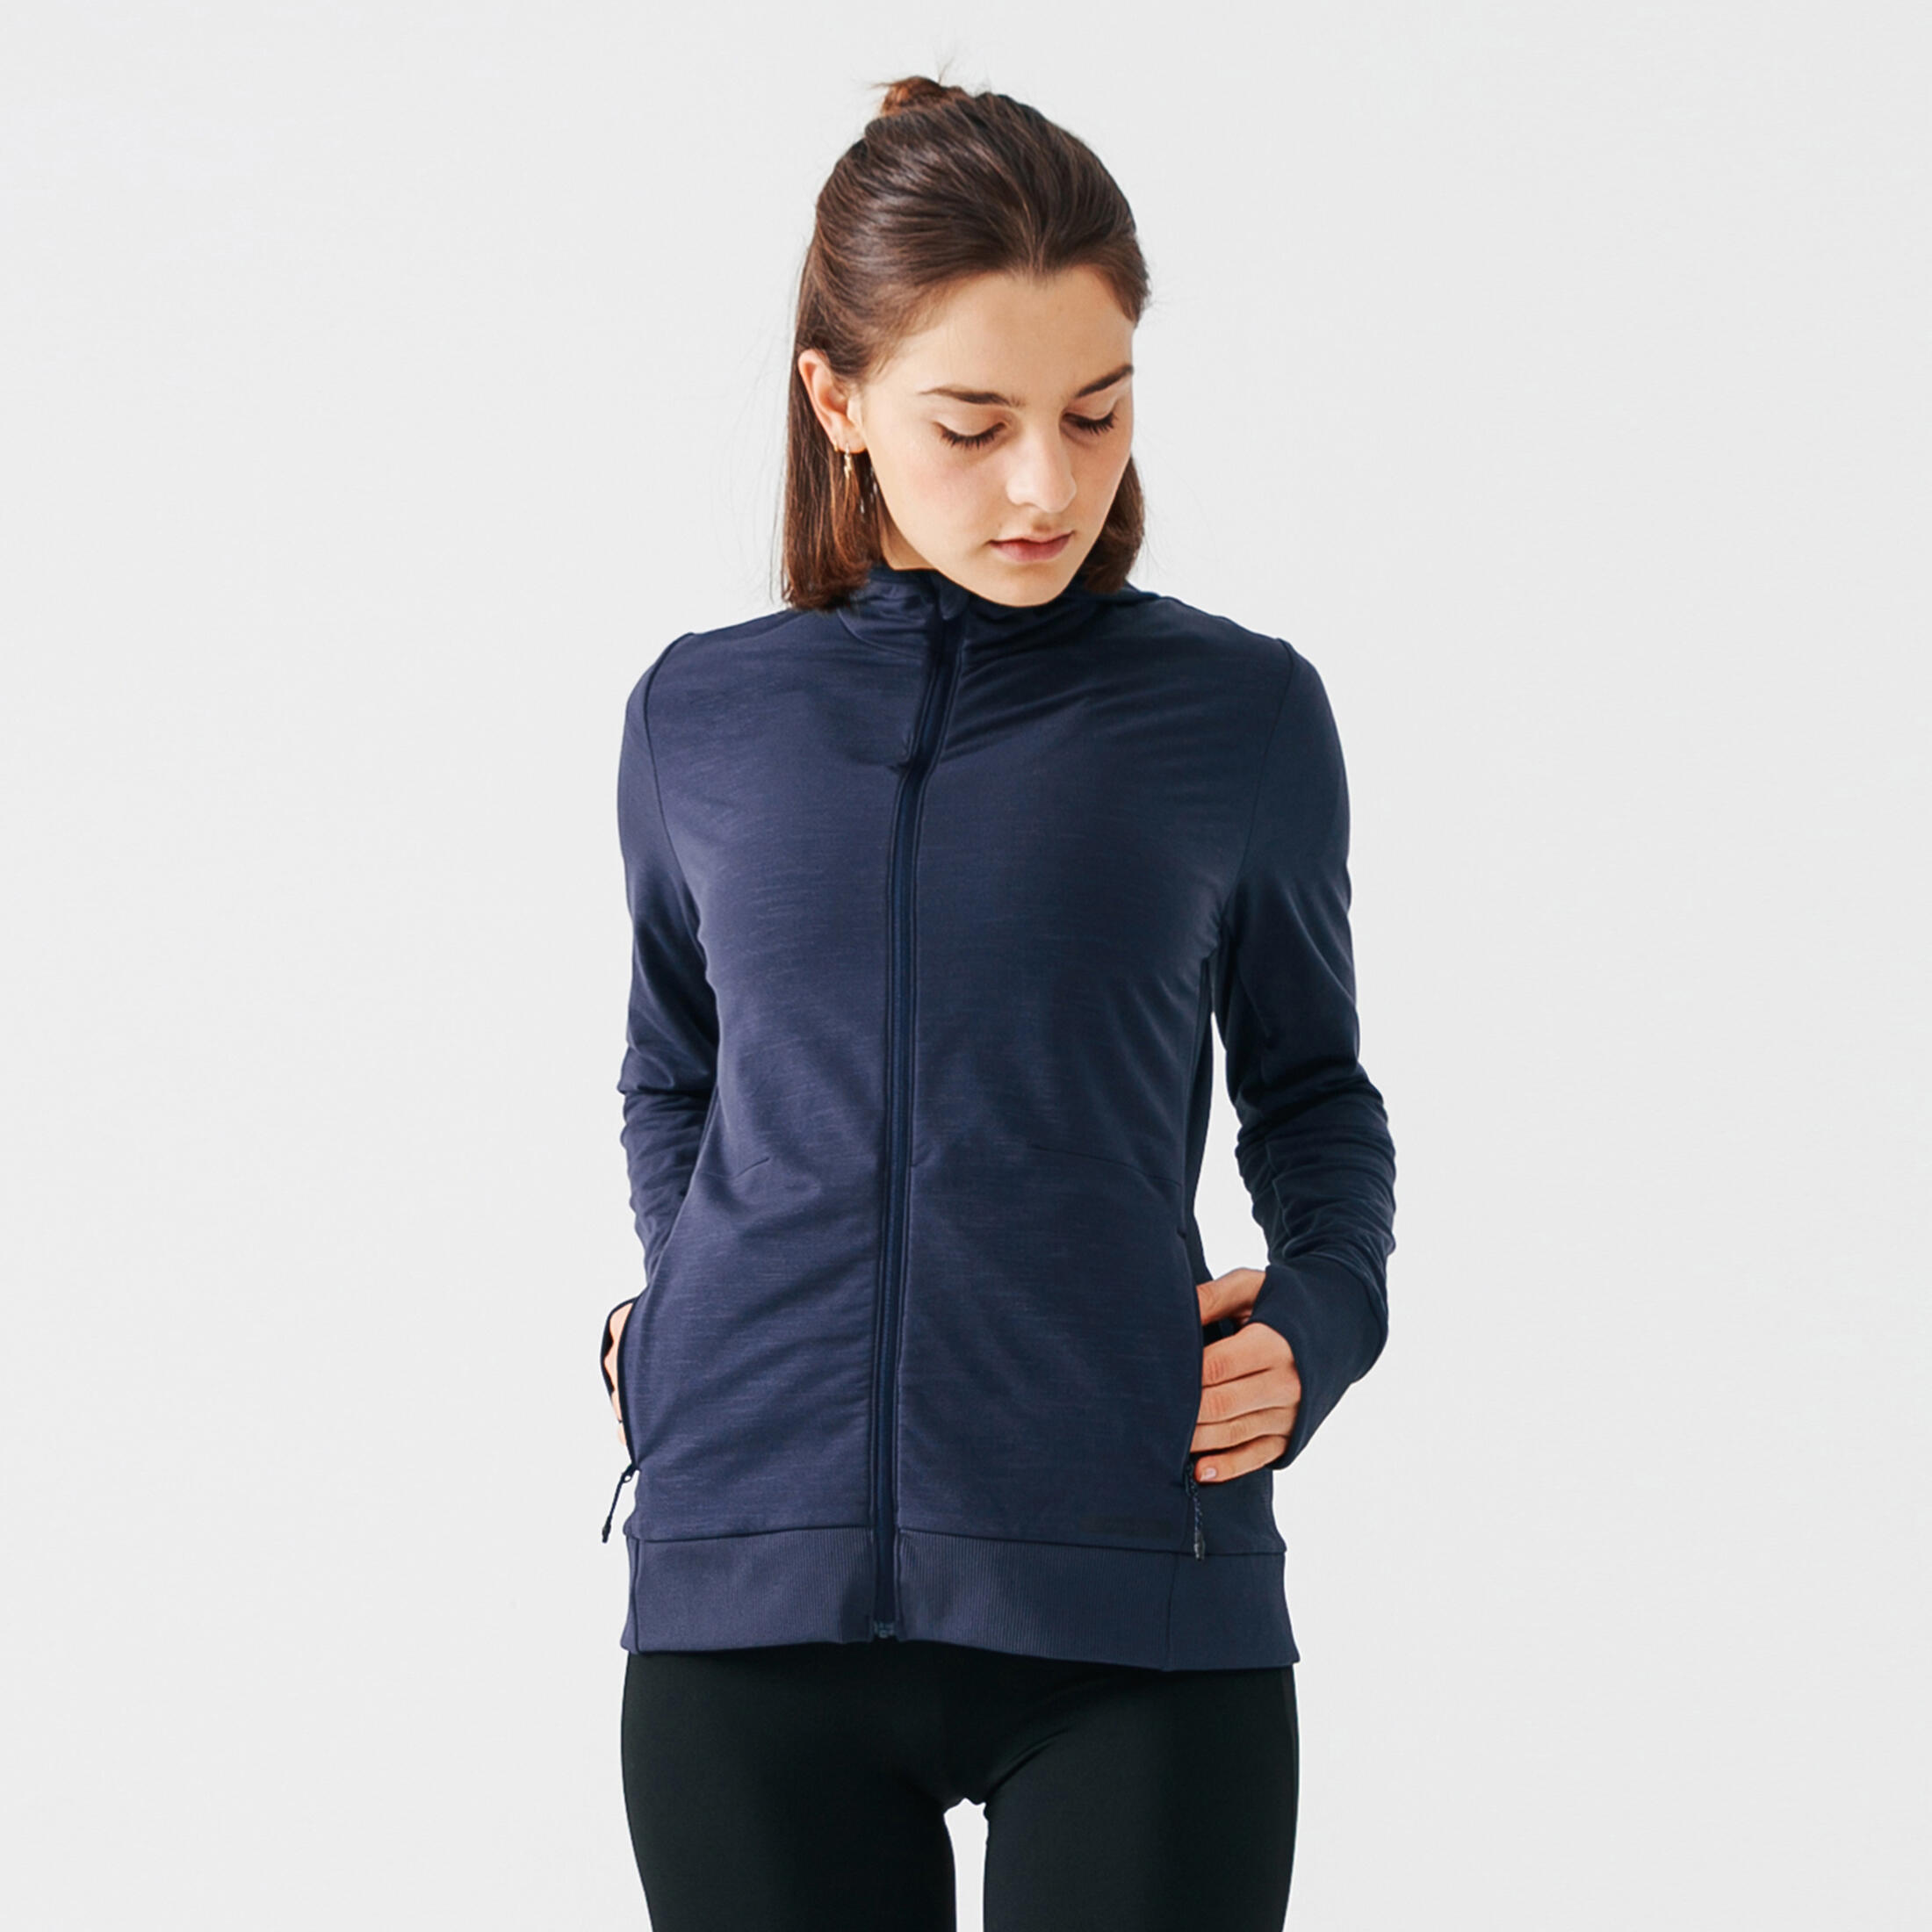 Women's Running Hooded Jacket Warm - dark blue KALENJI